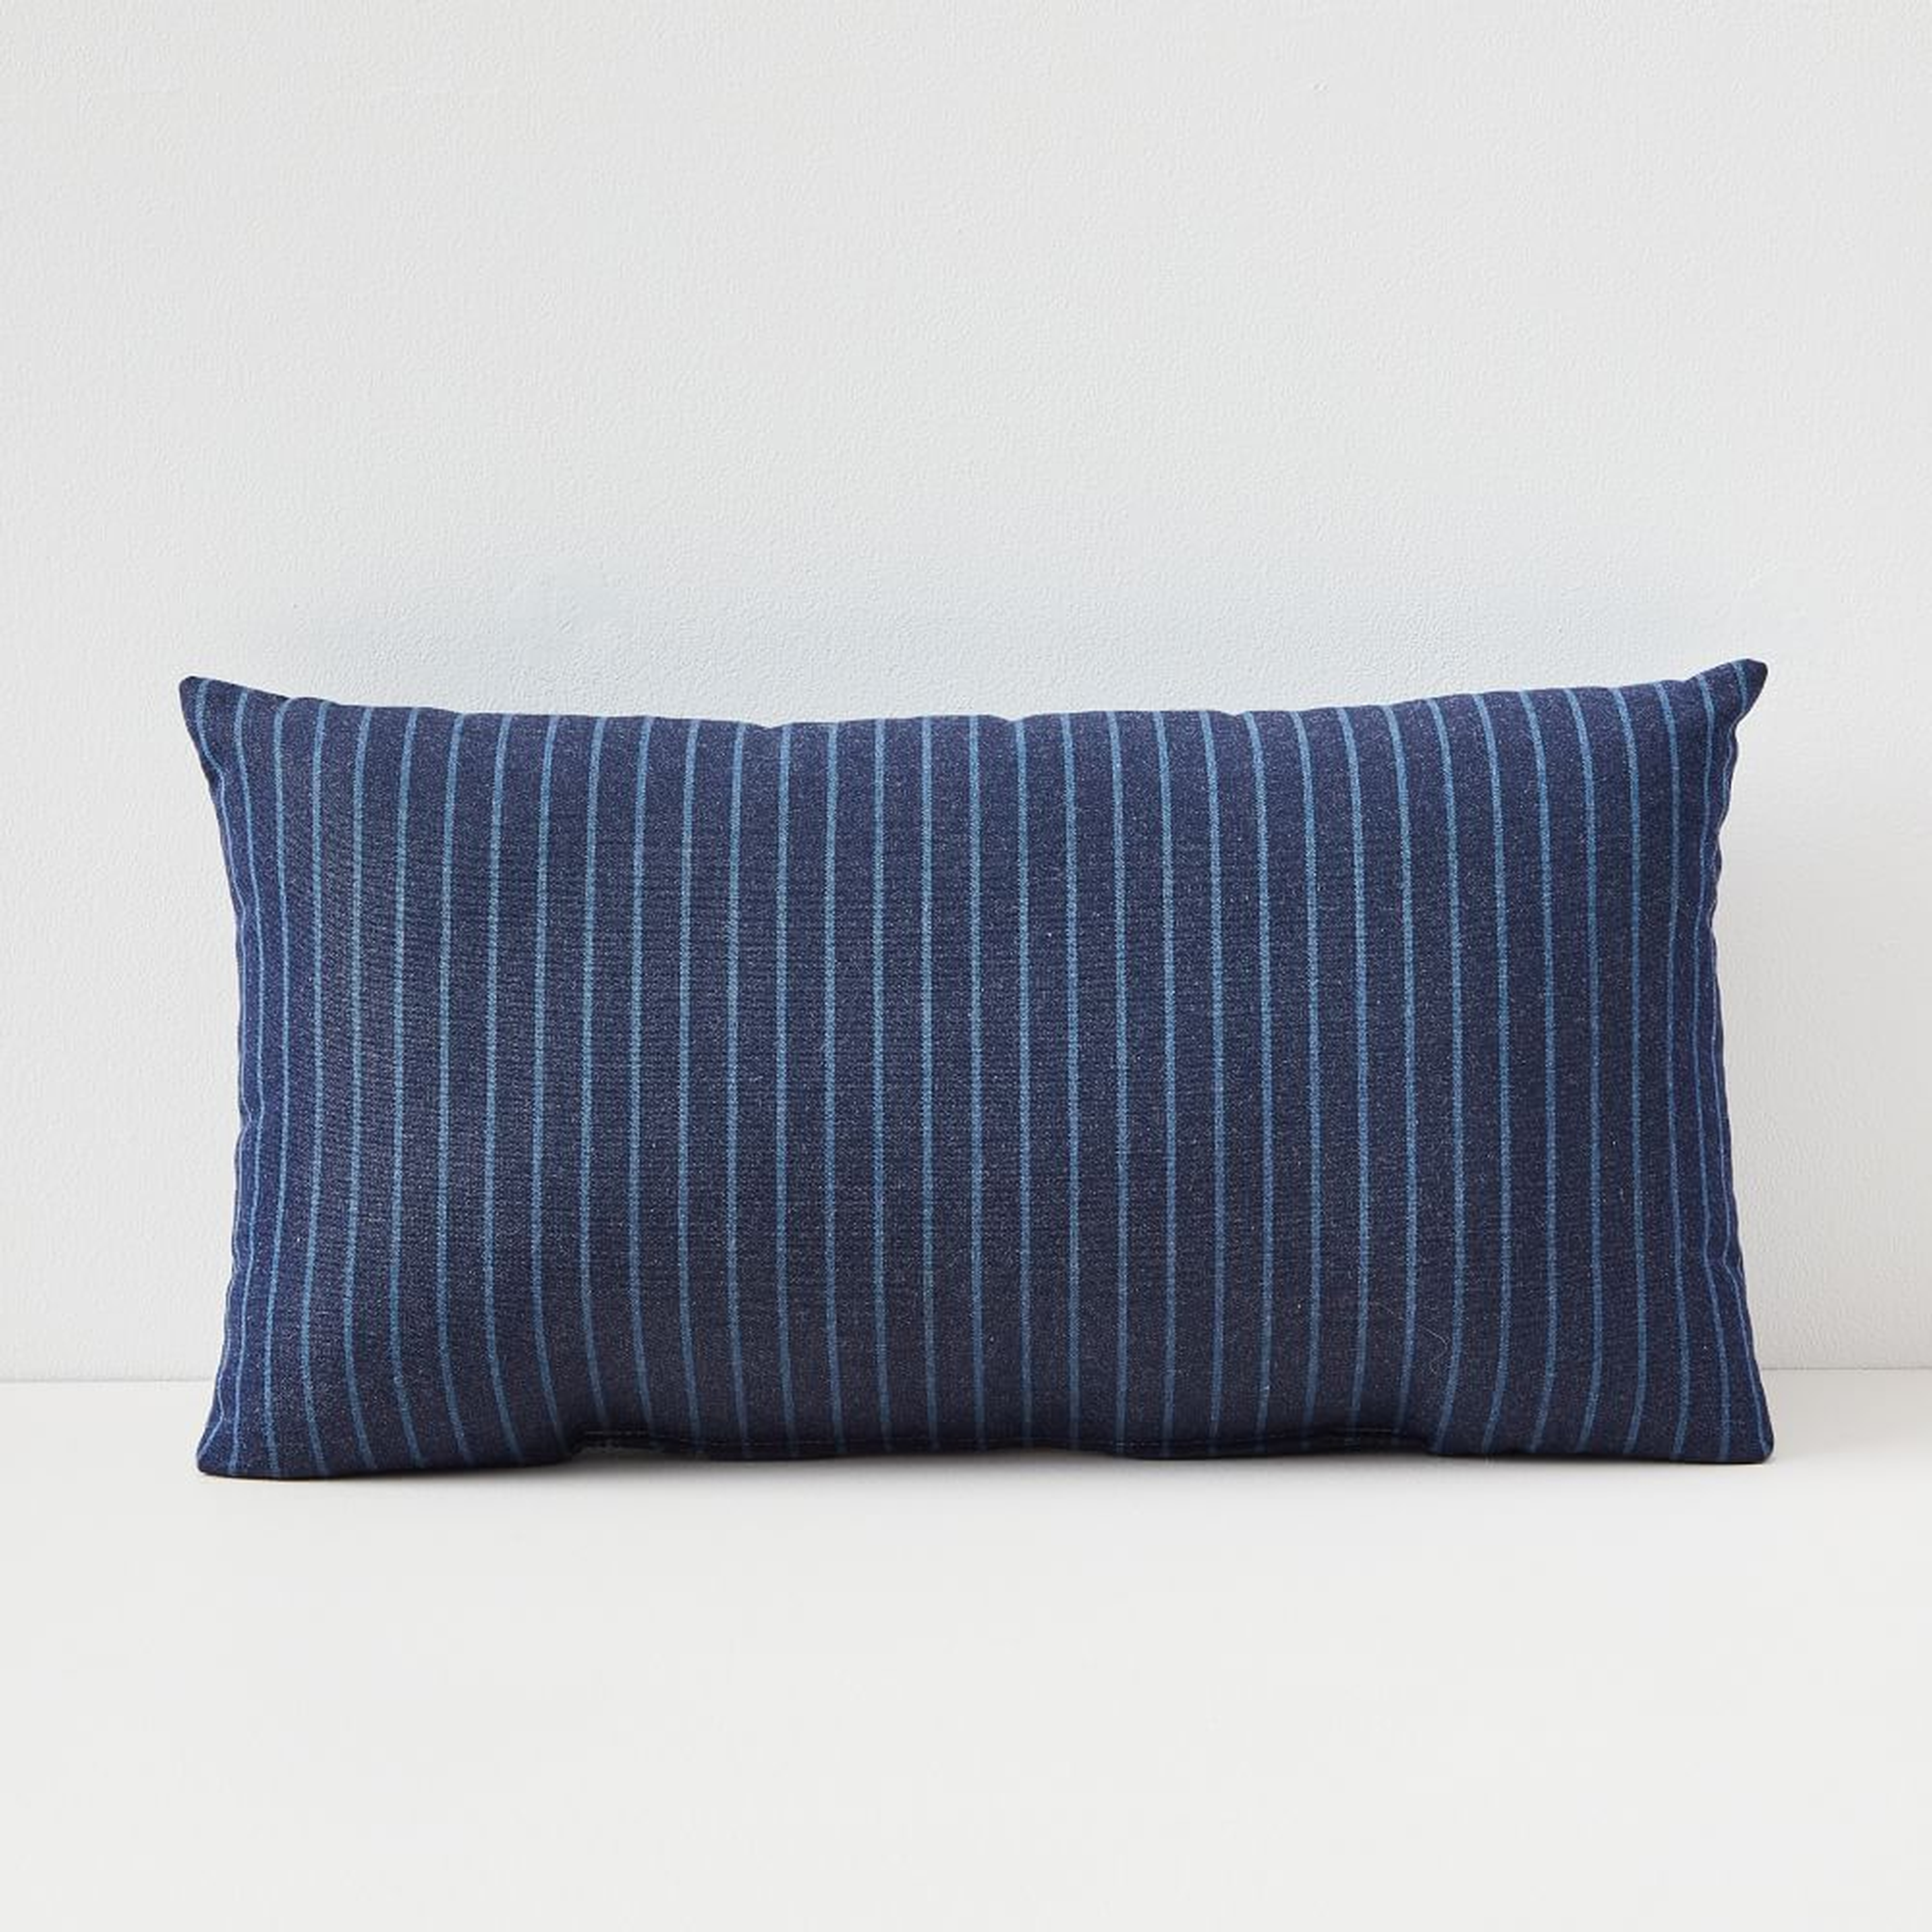 Sunbrella Indoor/Outdoor Striped Lumbar Pillow, Indigo, Set of 2, 12"x21" - West Elm